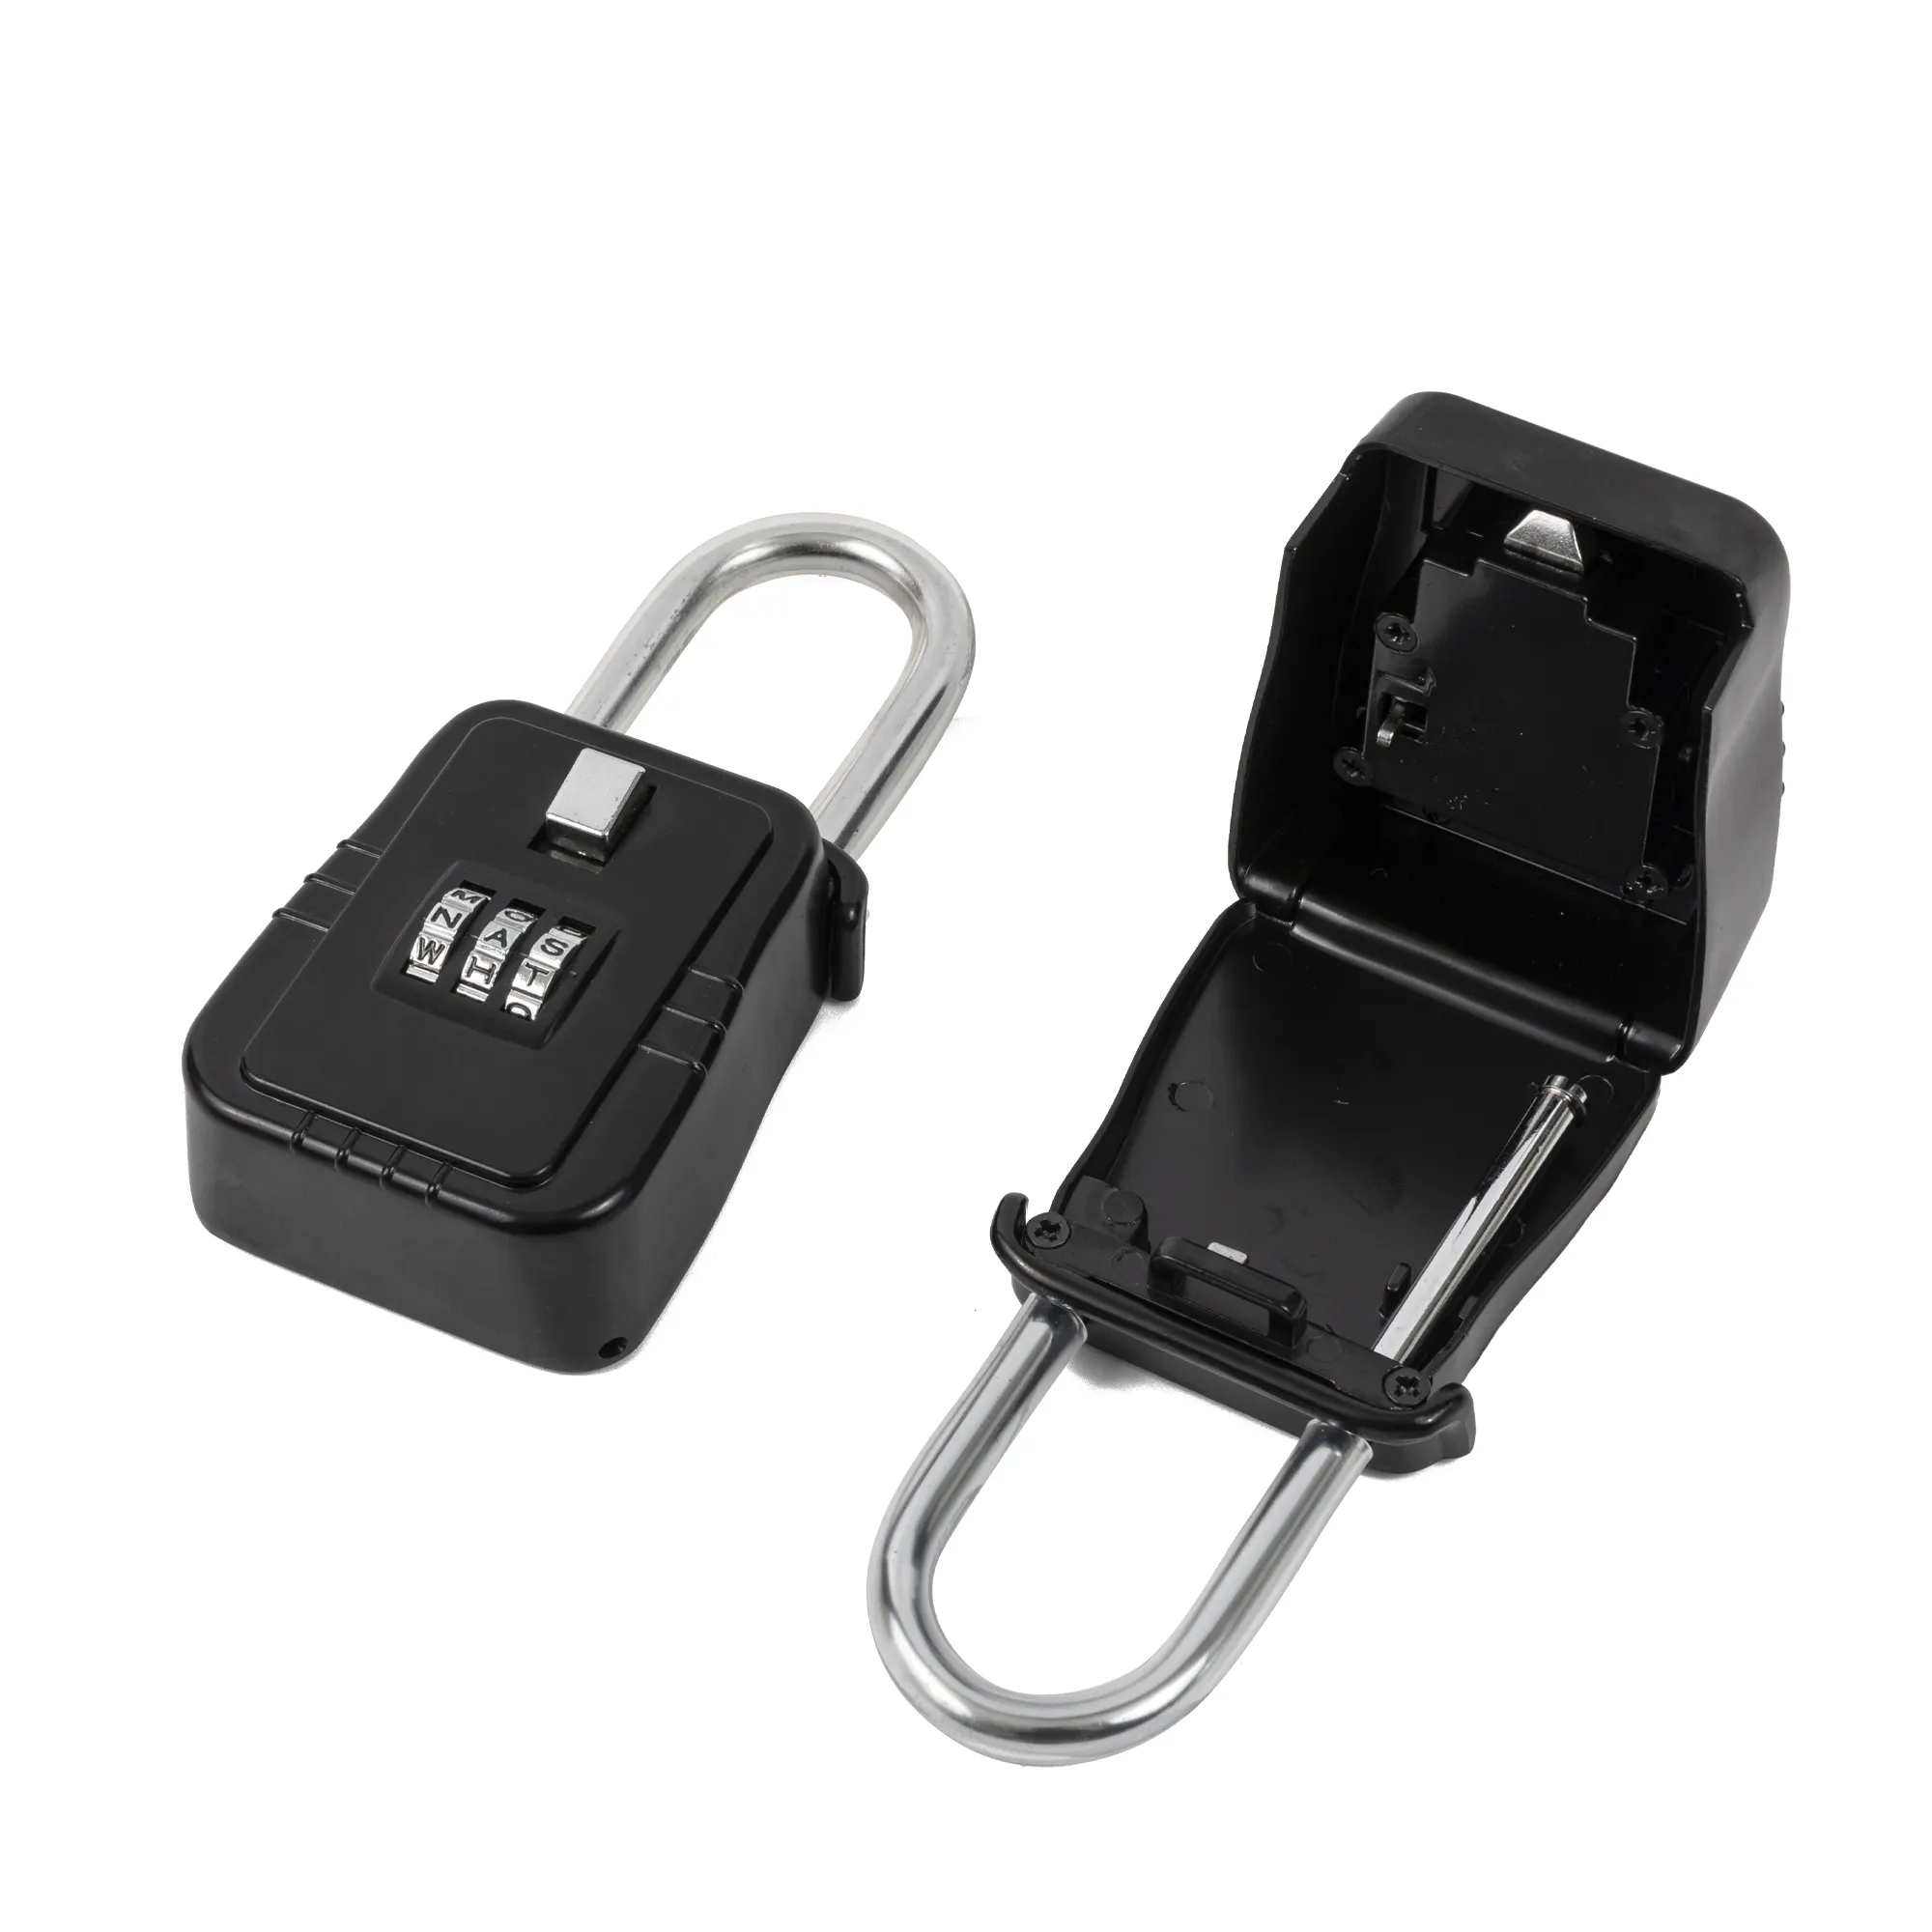 4 chiavi digitali personalizzate cassetta di sicurezza serratura codice chiave cassetta di sicurezza cassetta di sicurezza